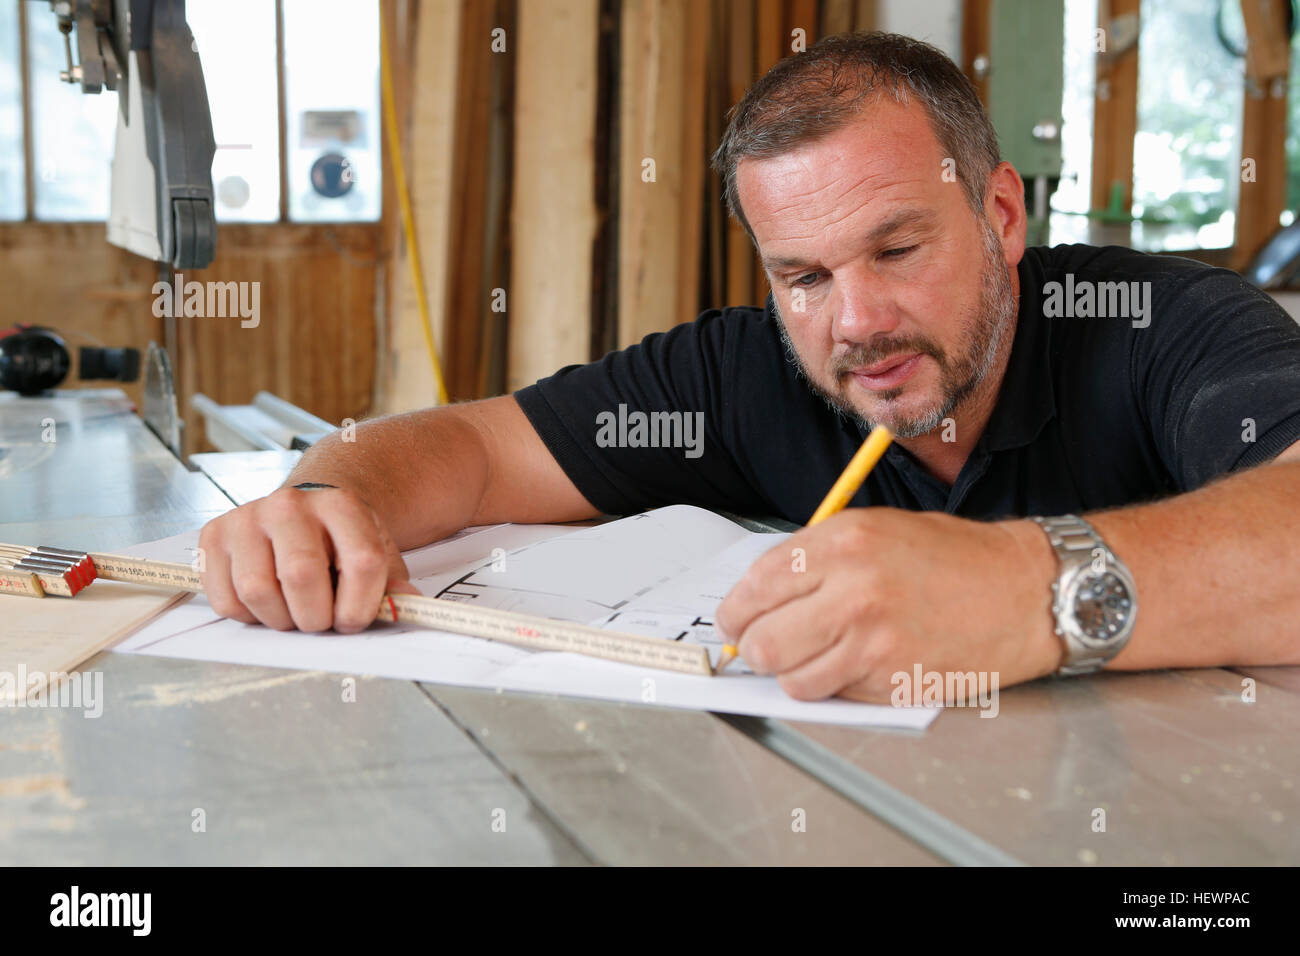 Man drawing blueprint Stock Photo